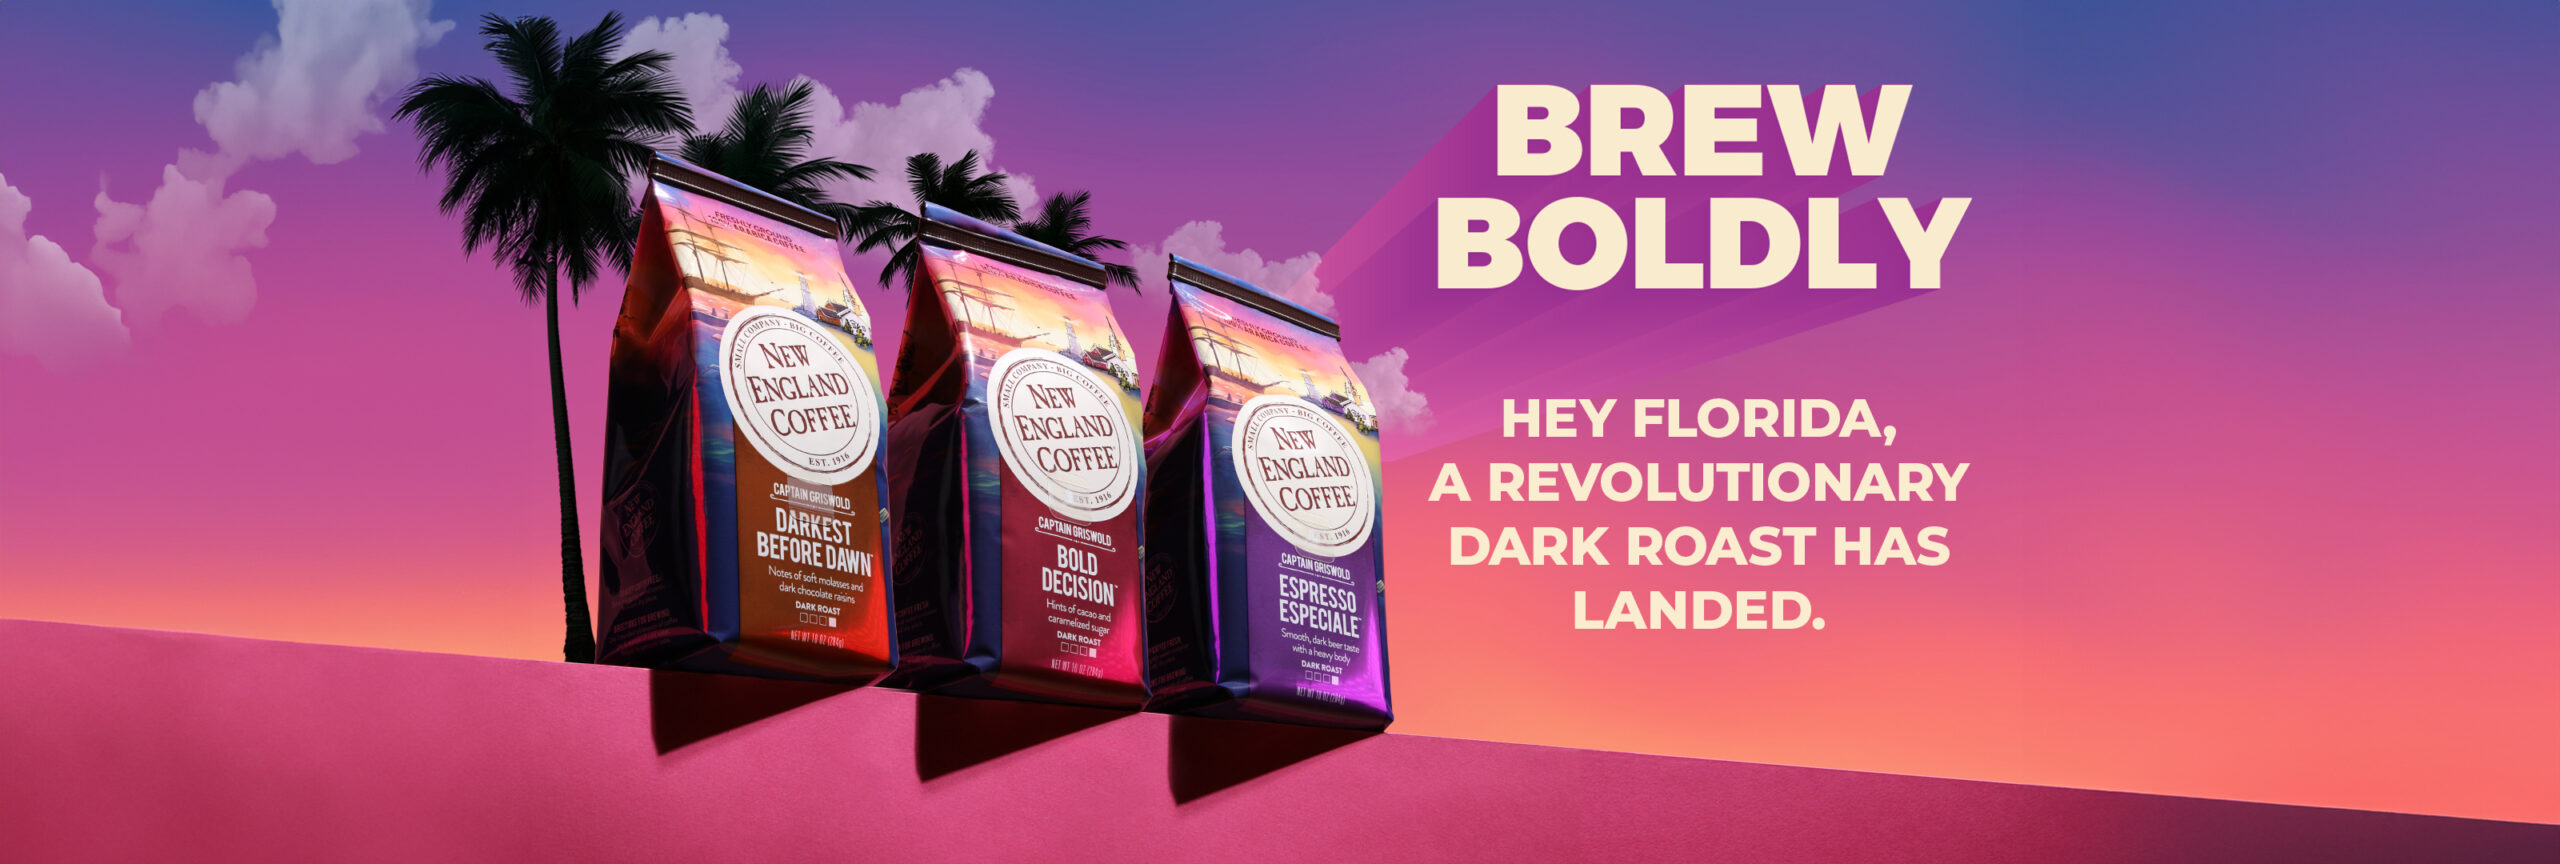 Florida Brew Boldly